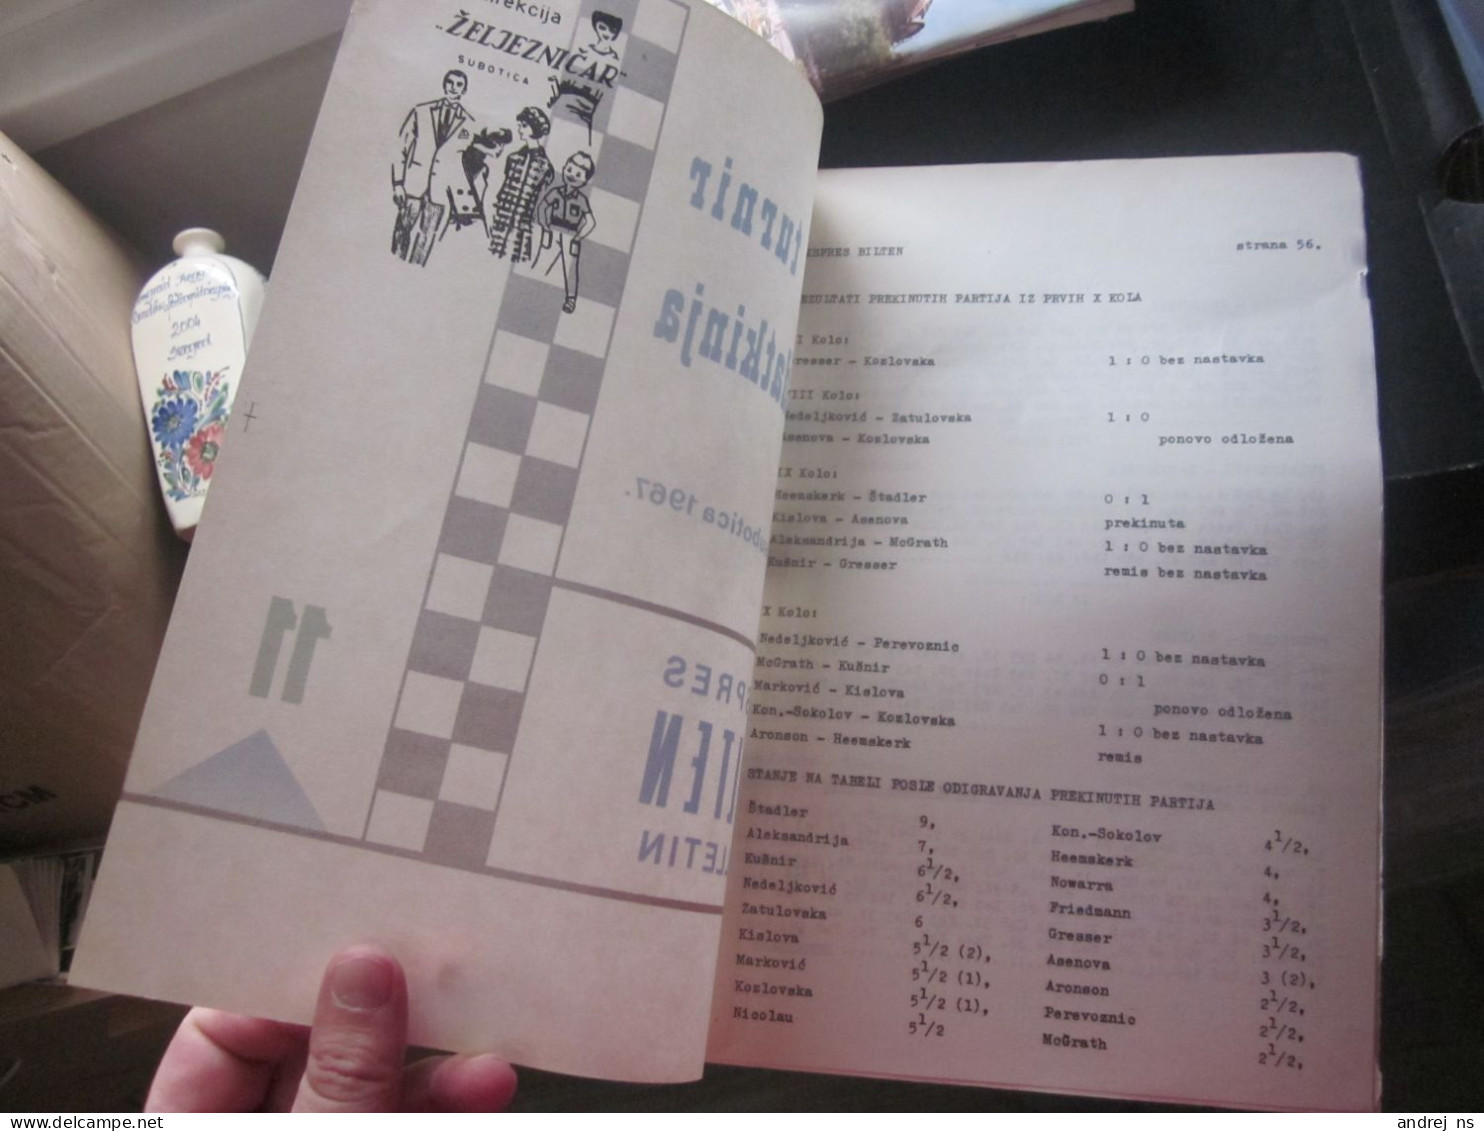 Chess Ekspres Bilten Bulletin Subotica Szabadka 1967 - Programmi